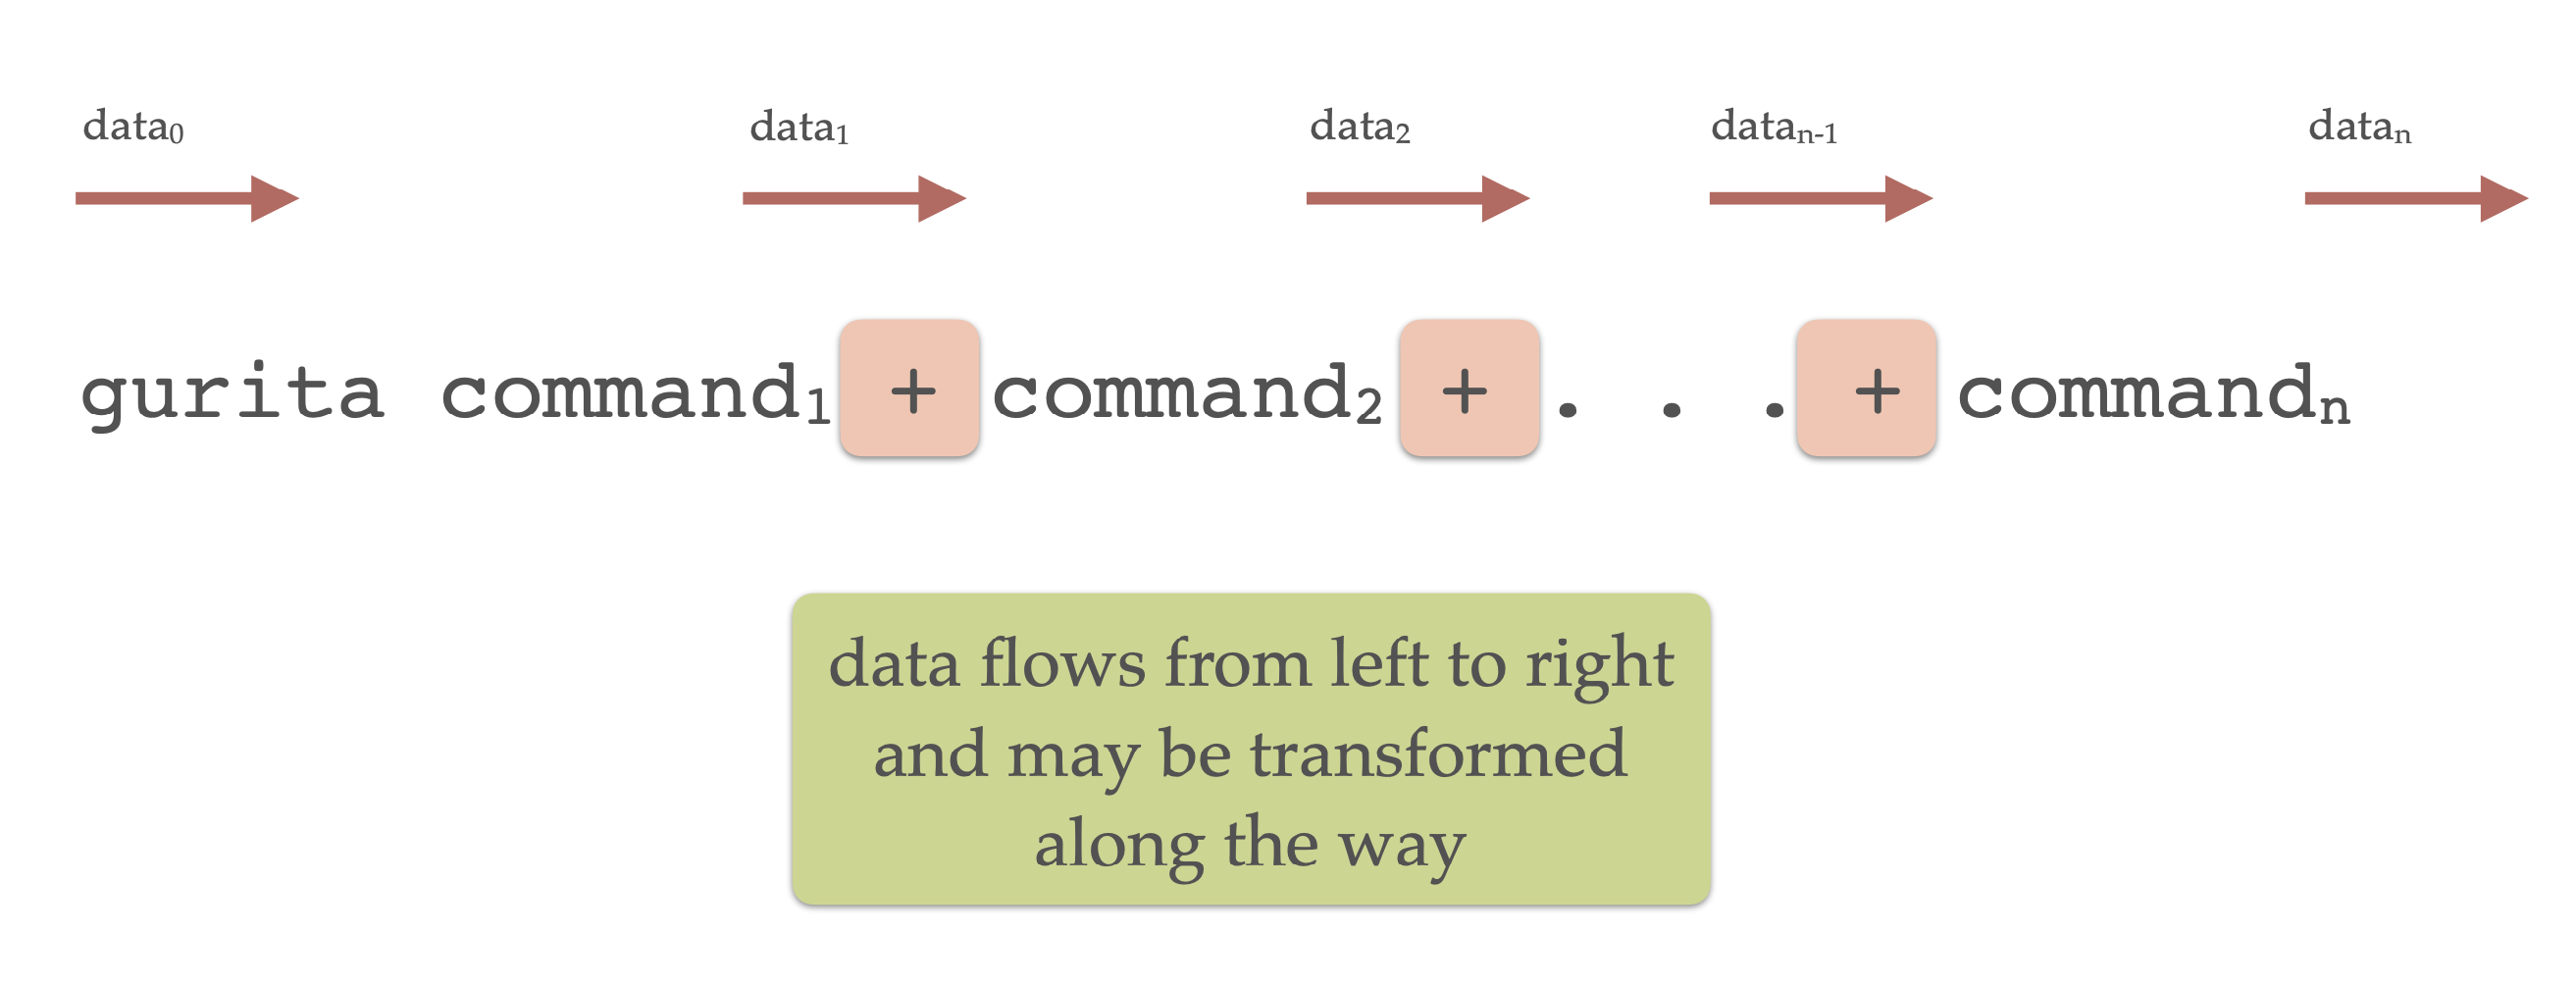 Illustration of data flow direction in Gurita command chain